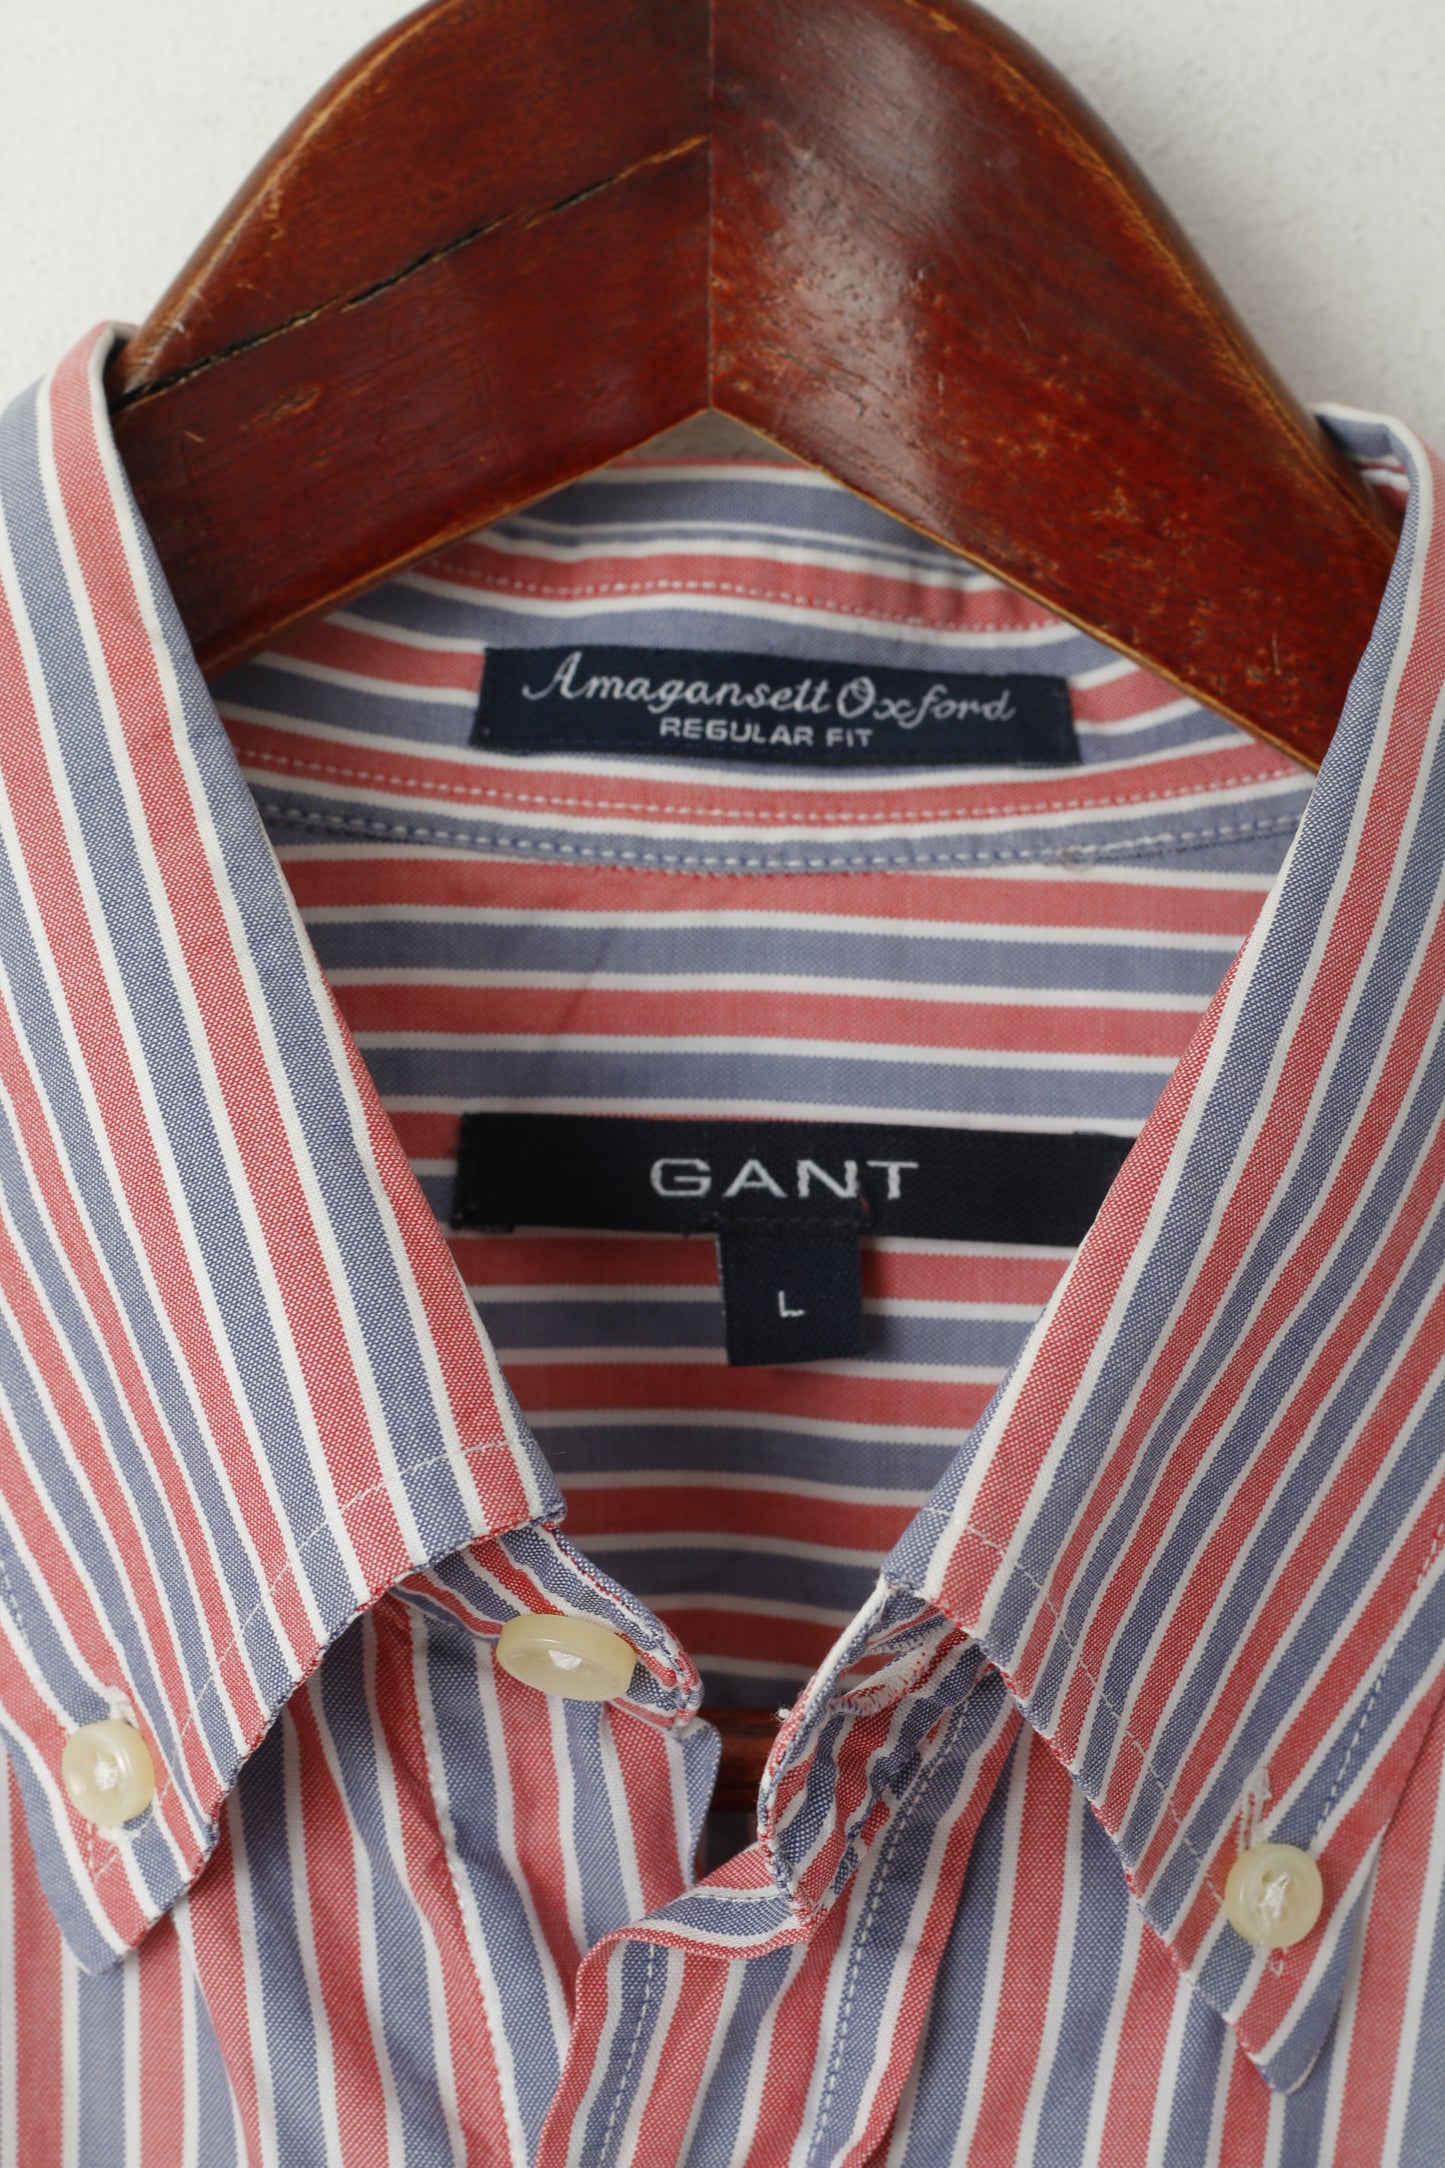 GANT Men L Casual Shirt Red Blue Striped Cotton Amagansett Oxford Fit Short Sleeve Top